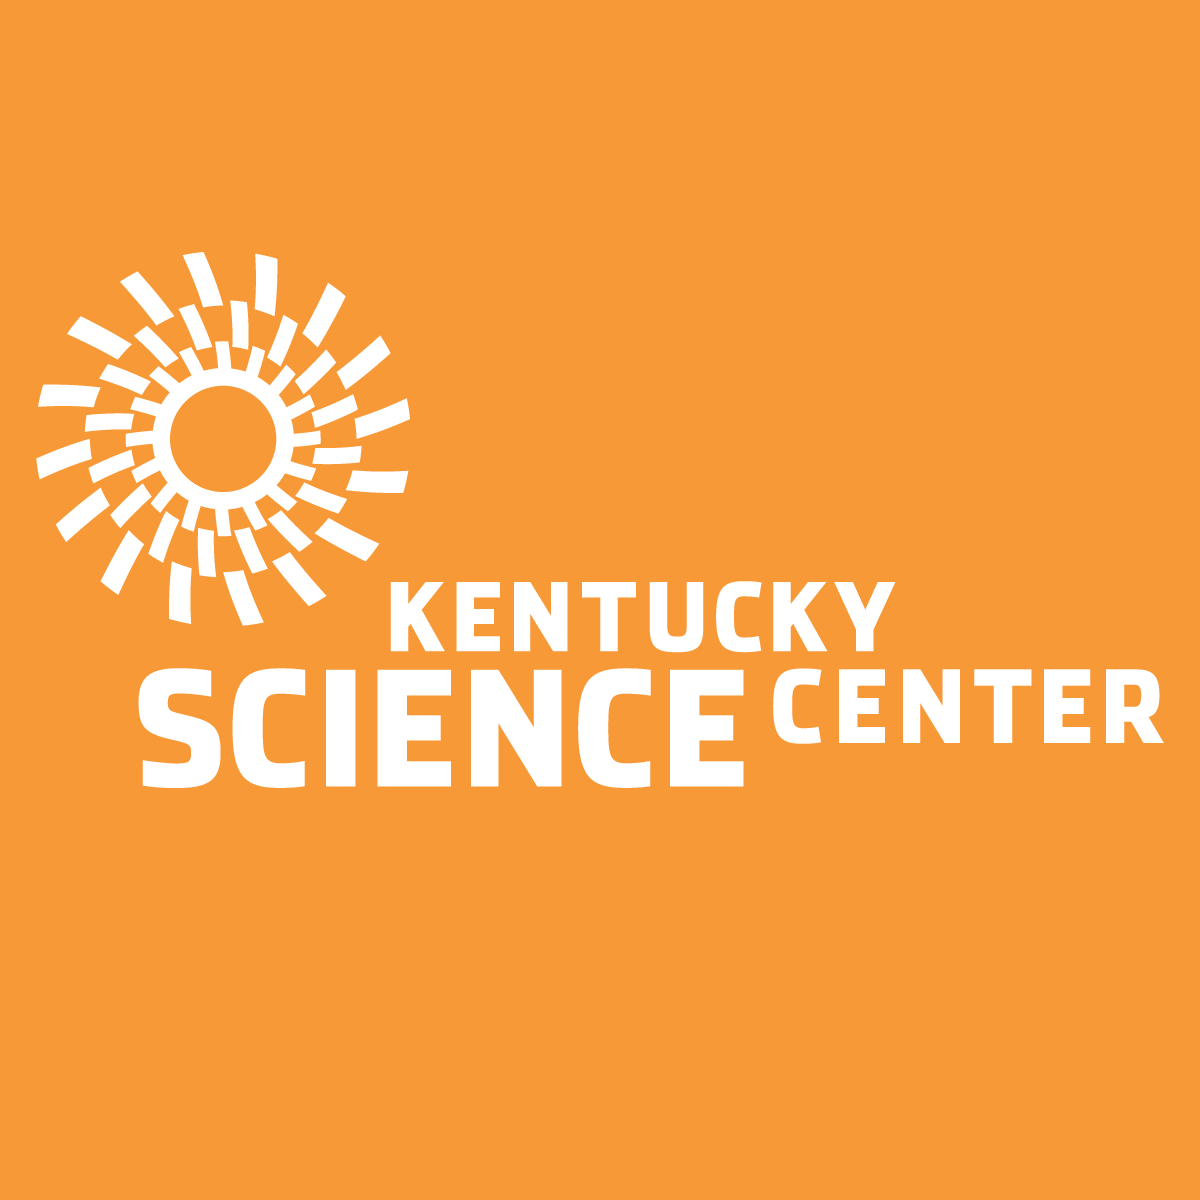 Kentucky Science Center|Zoo and Wildlife Sanctuary |Travel